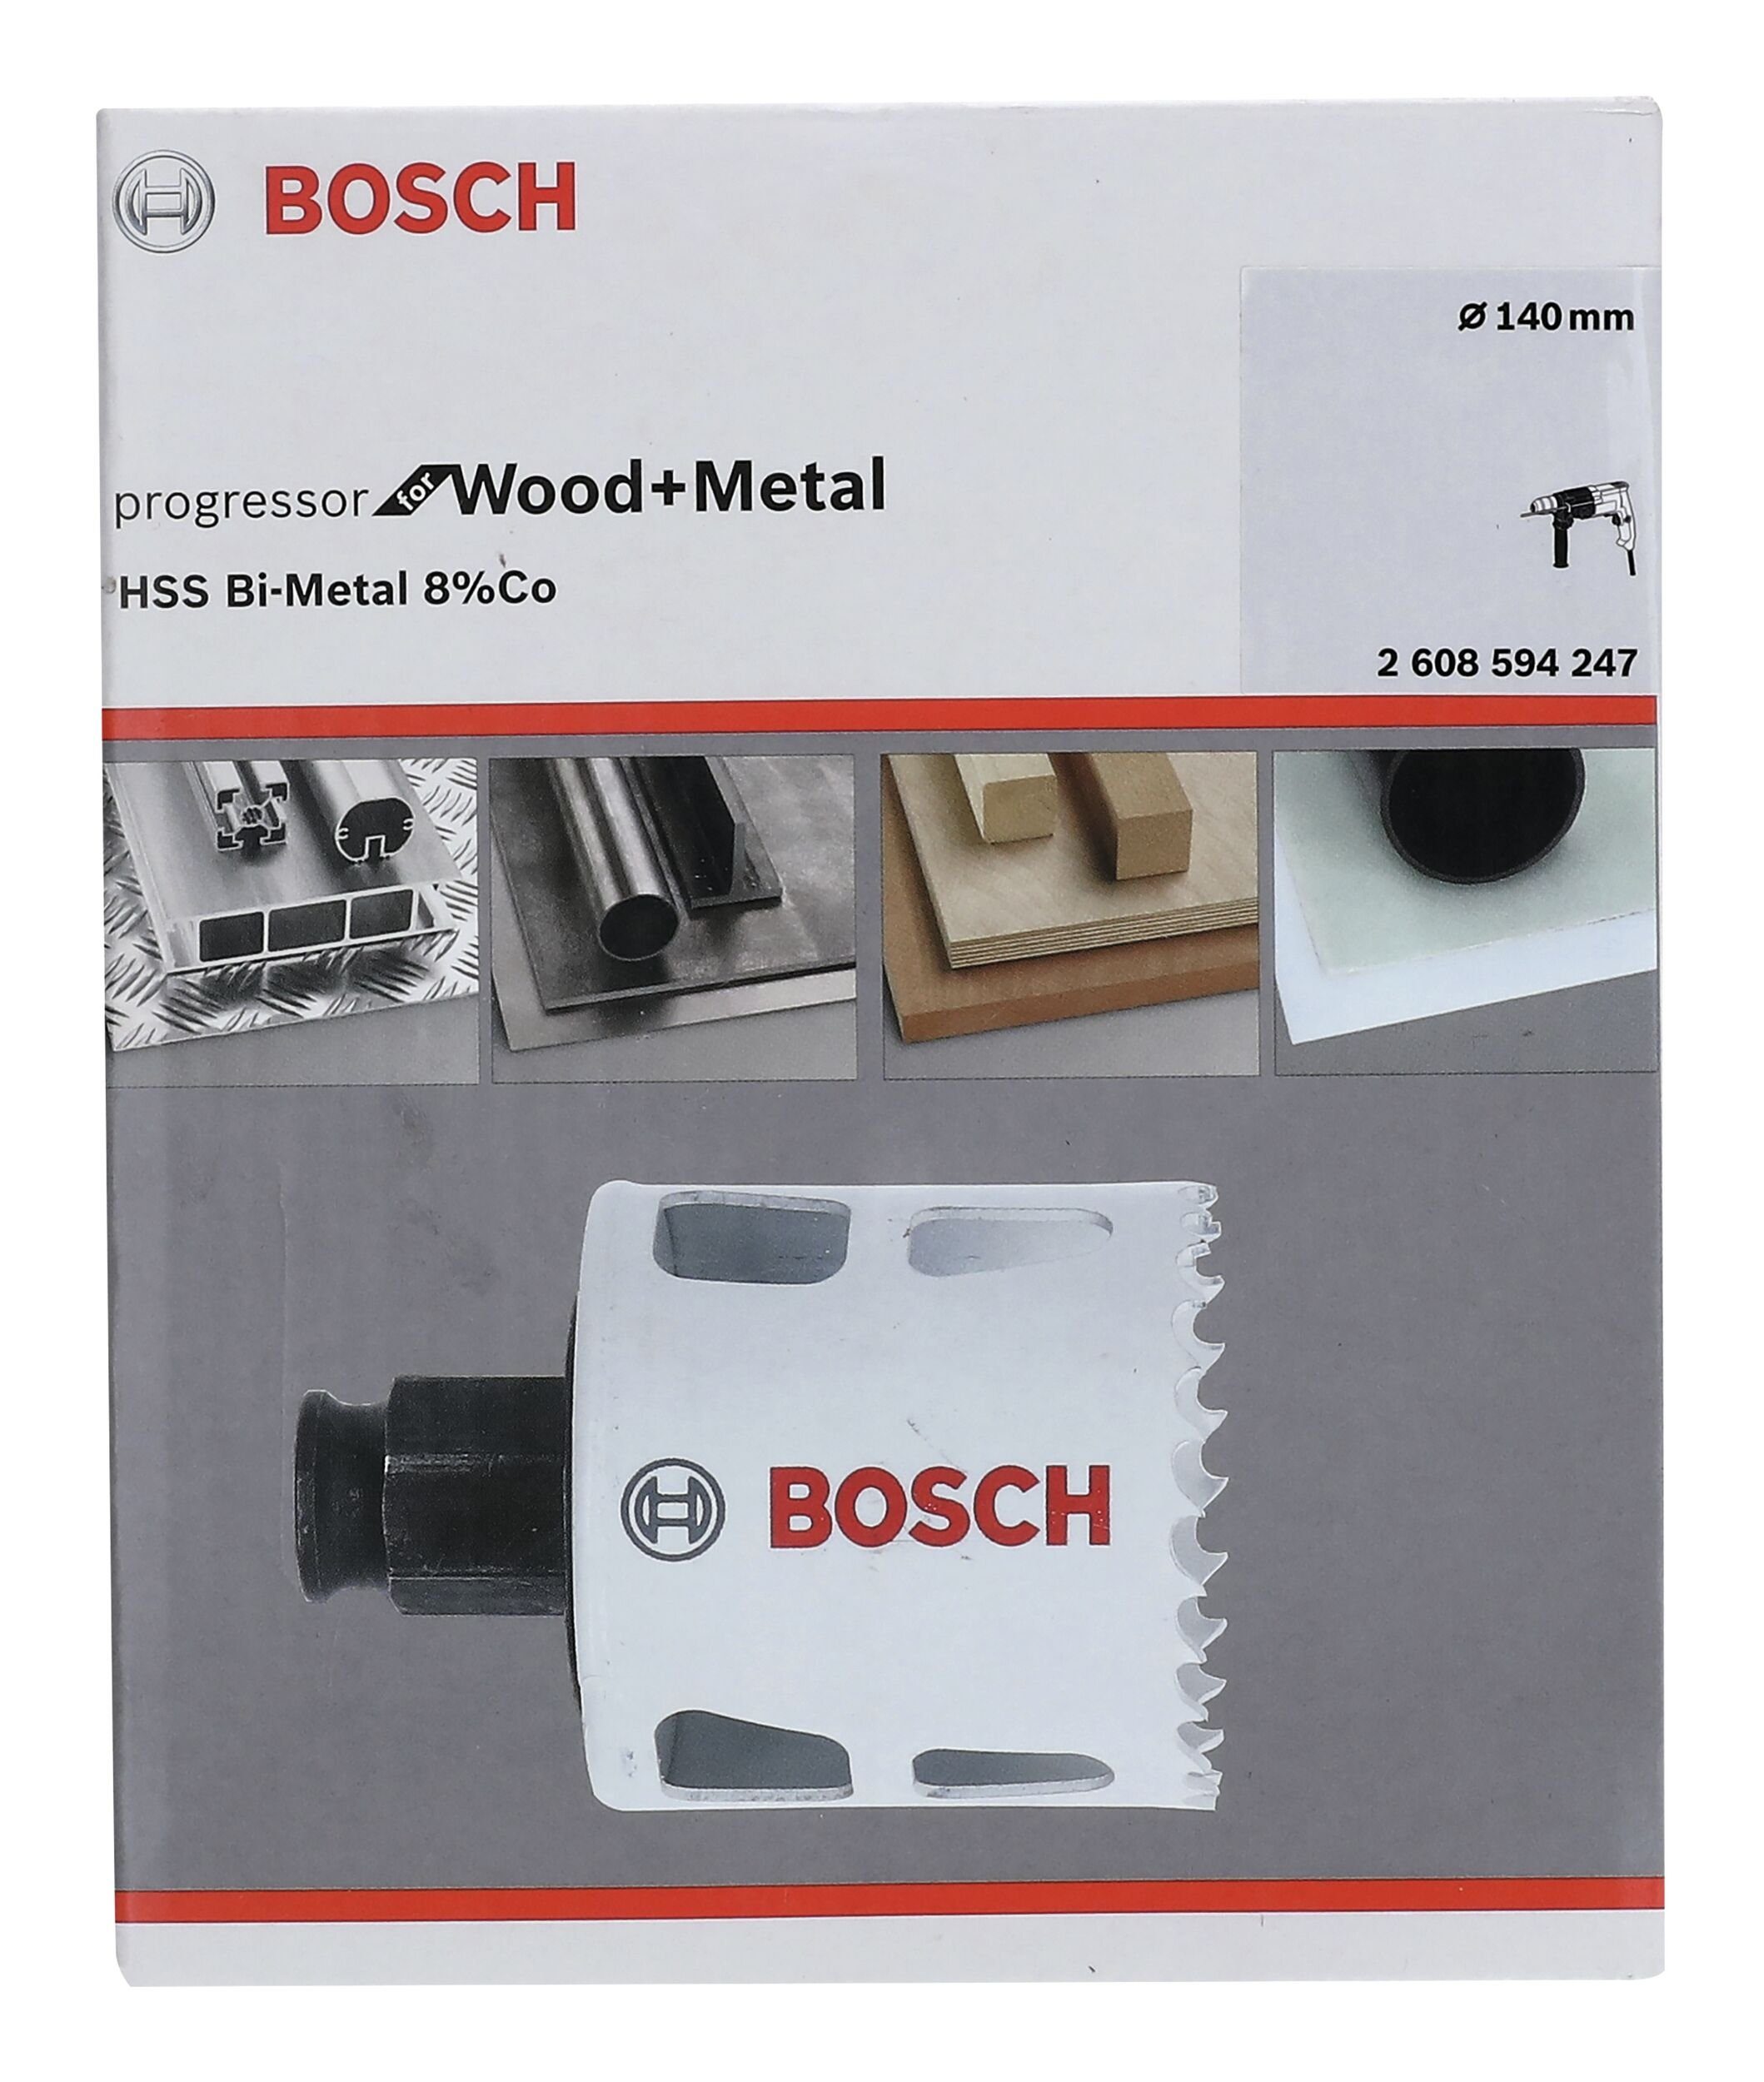 BOSCH Lochsäge, Ø 140 mm, and Wood Metal for Progressor